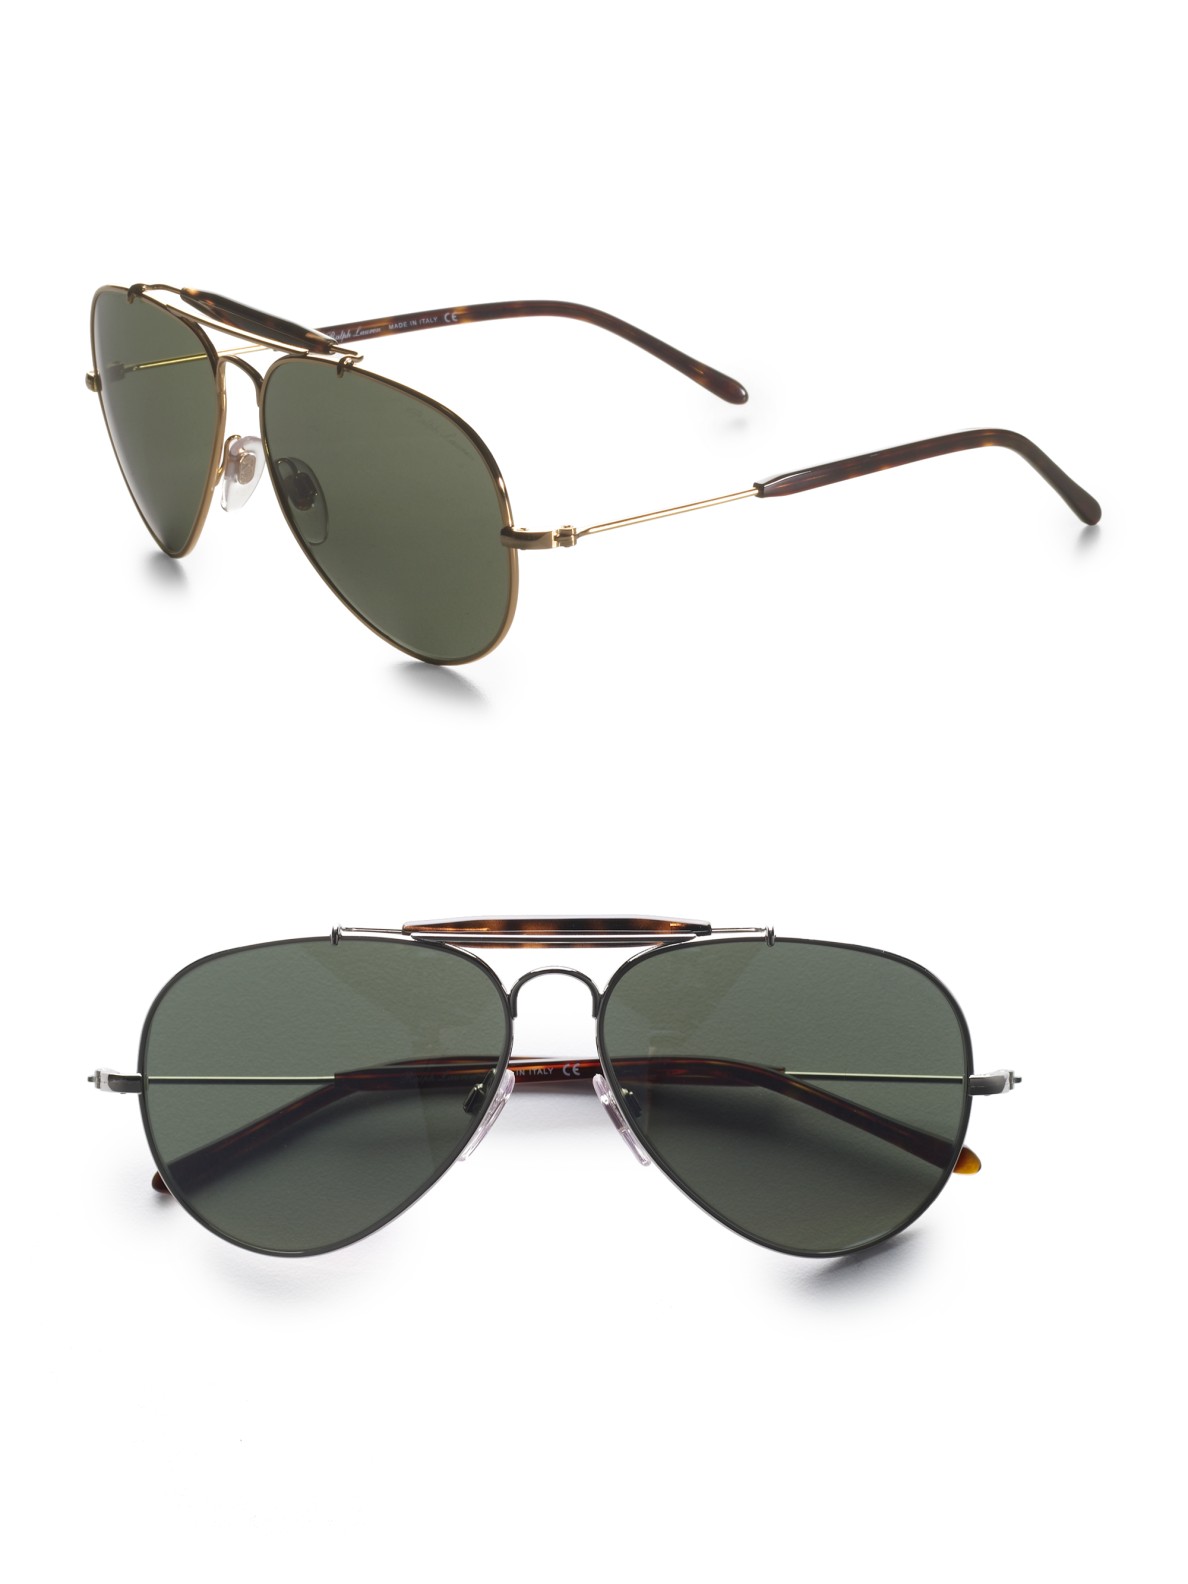 Polo Ralph Lauren Aviator Sunglasses in Silver (Metallic) for Men - Lyst